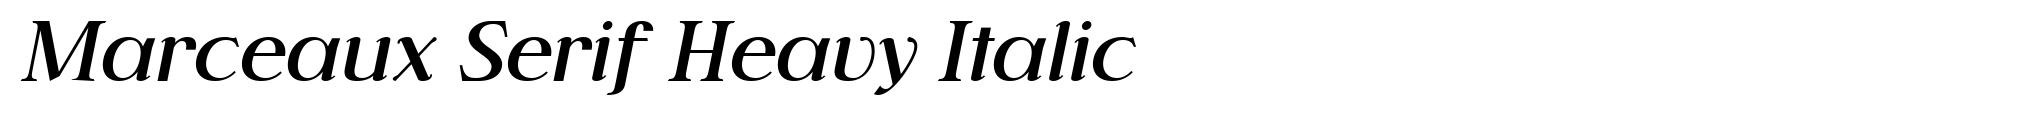 Marceaux Serif Heavy Italic image